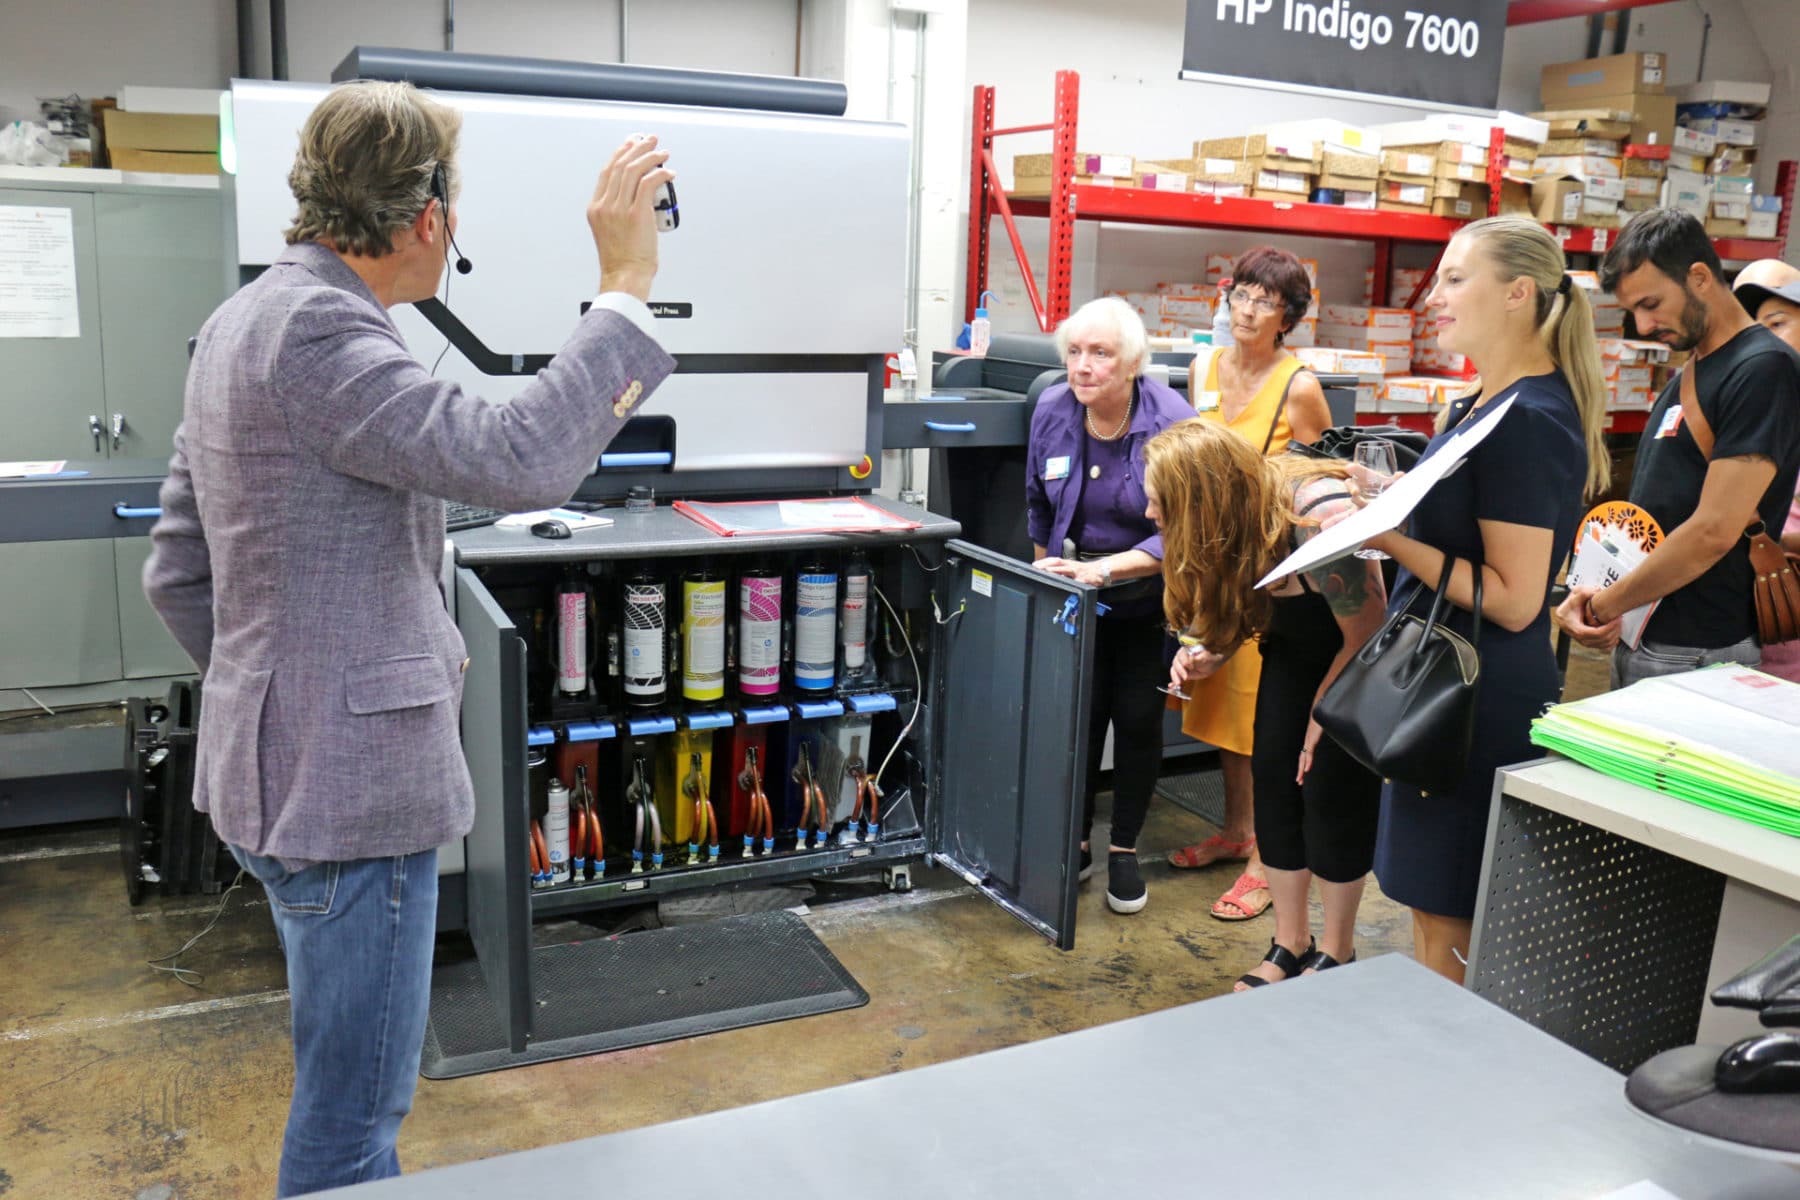 Guests observing Indigo printer during tour